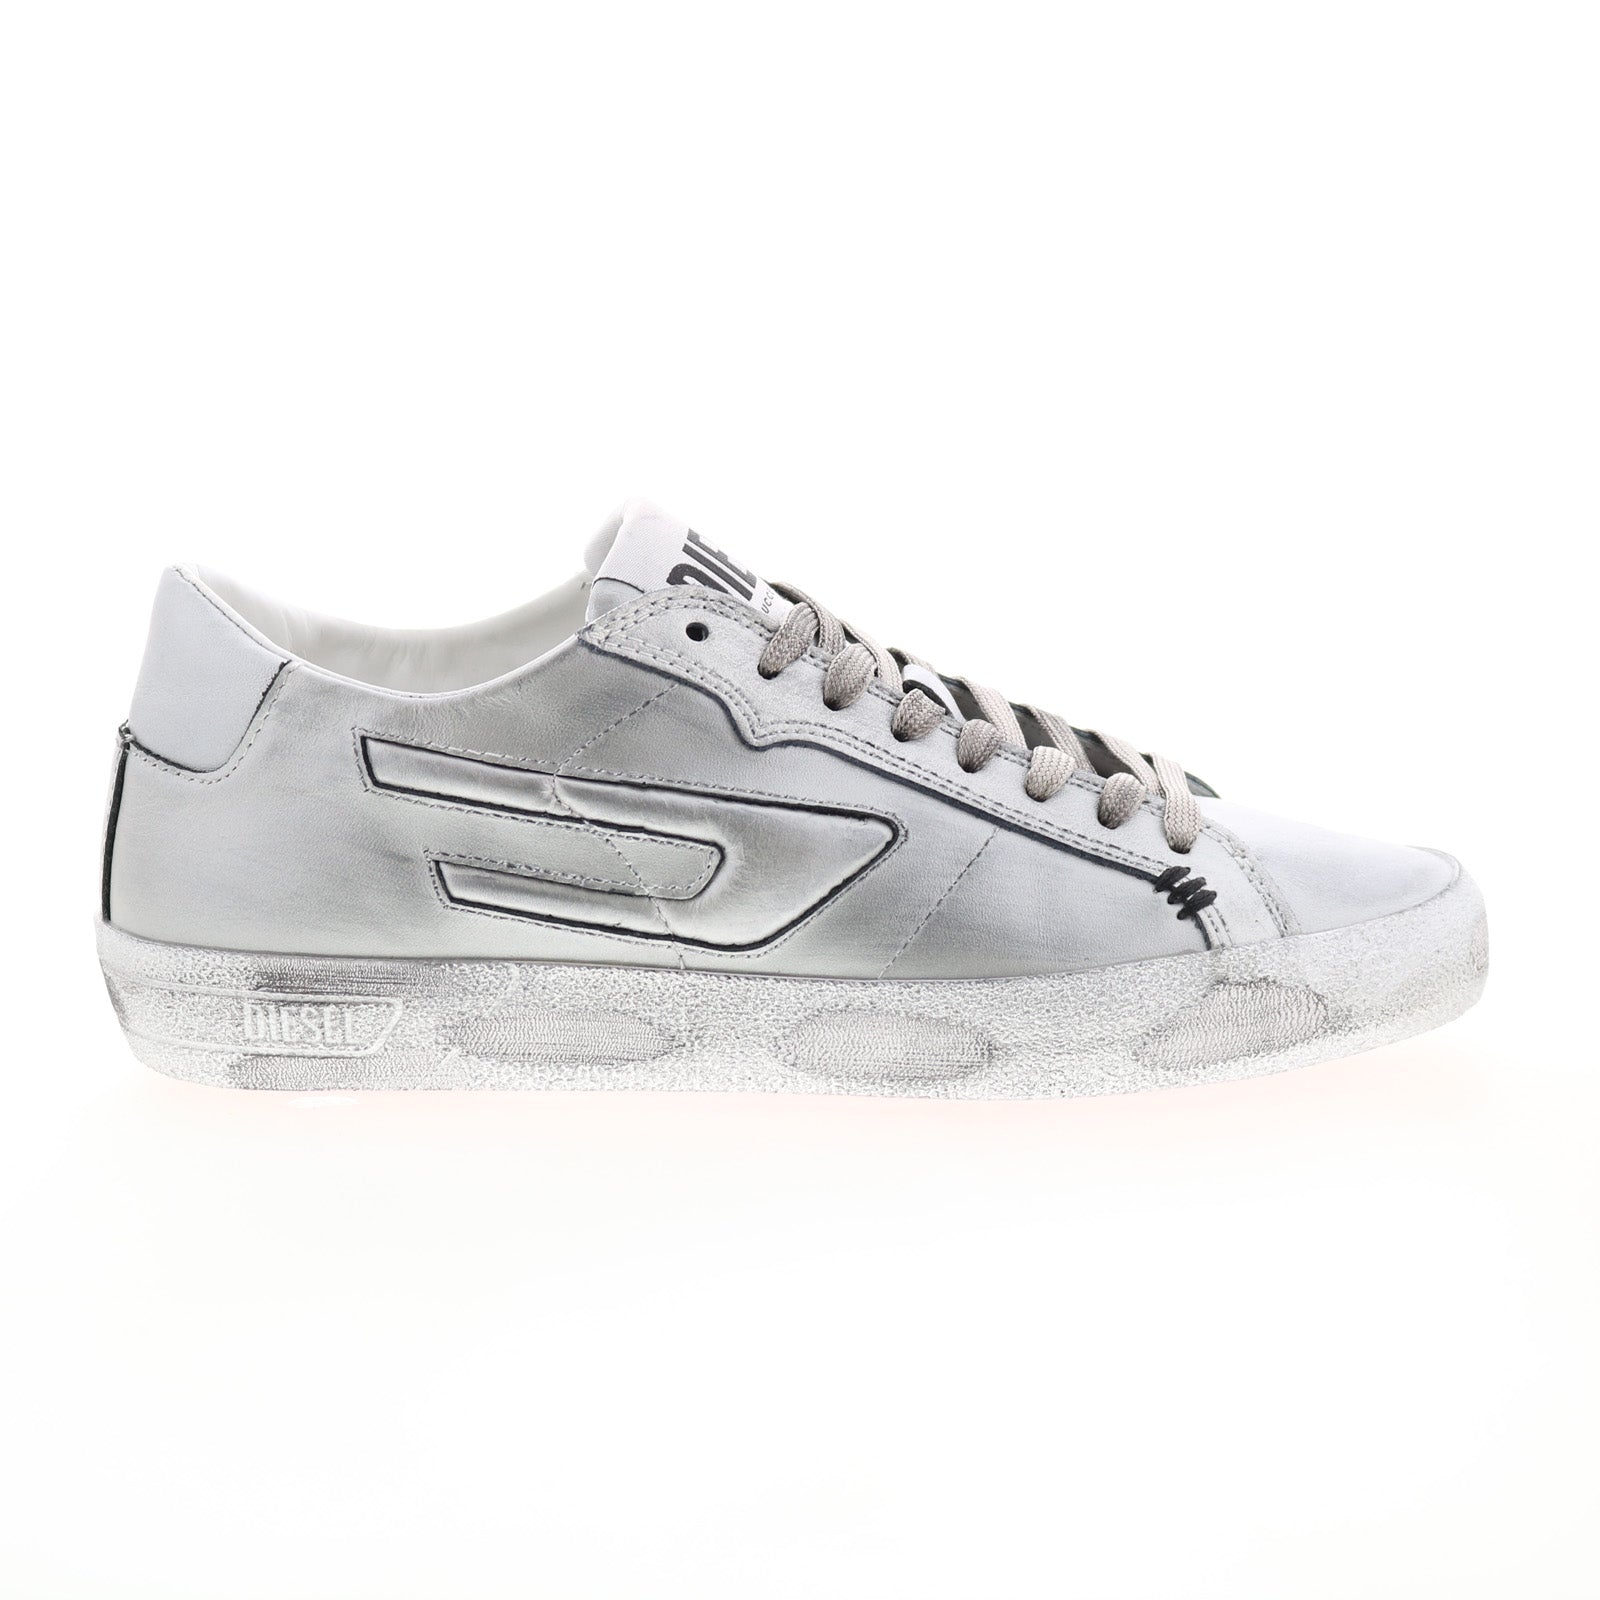 Diesel S-Leroji Low W Womens Silver Leather Lifestyle Sneakers Shoes